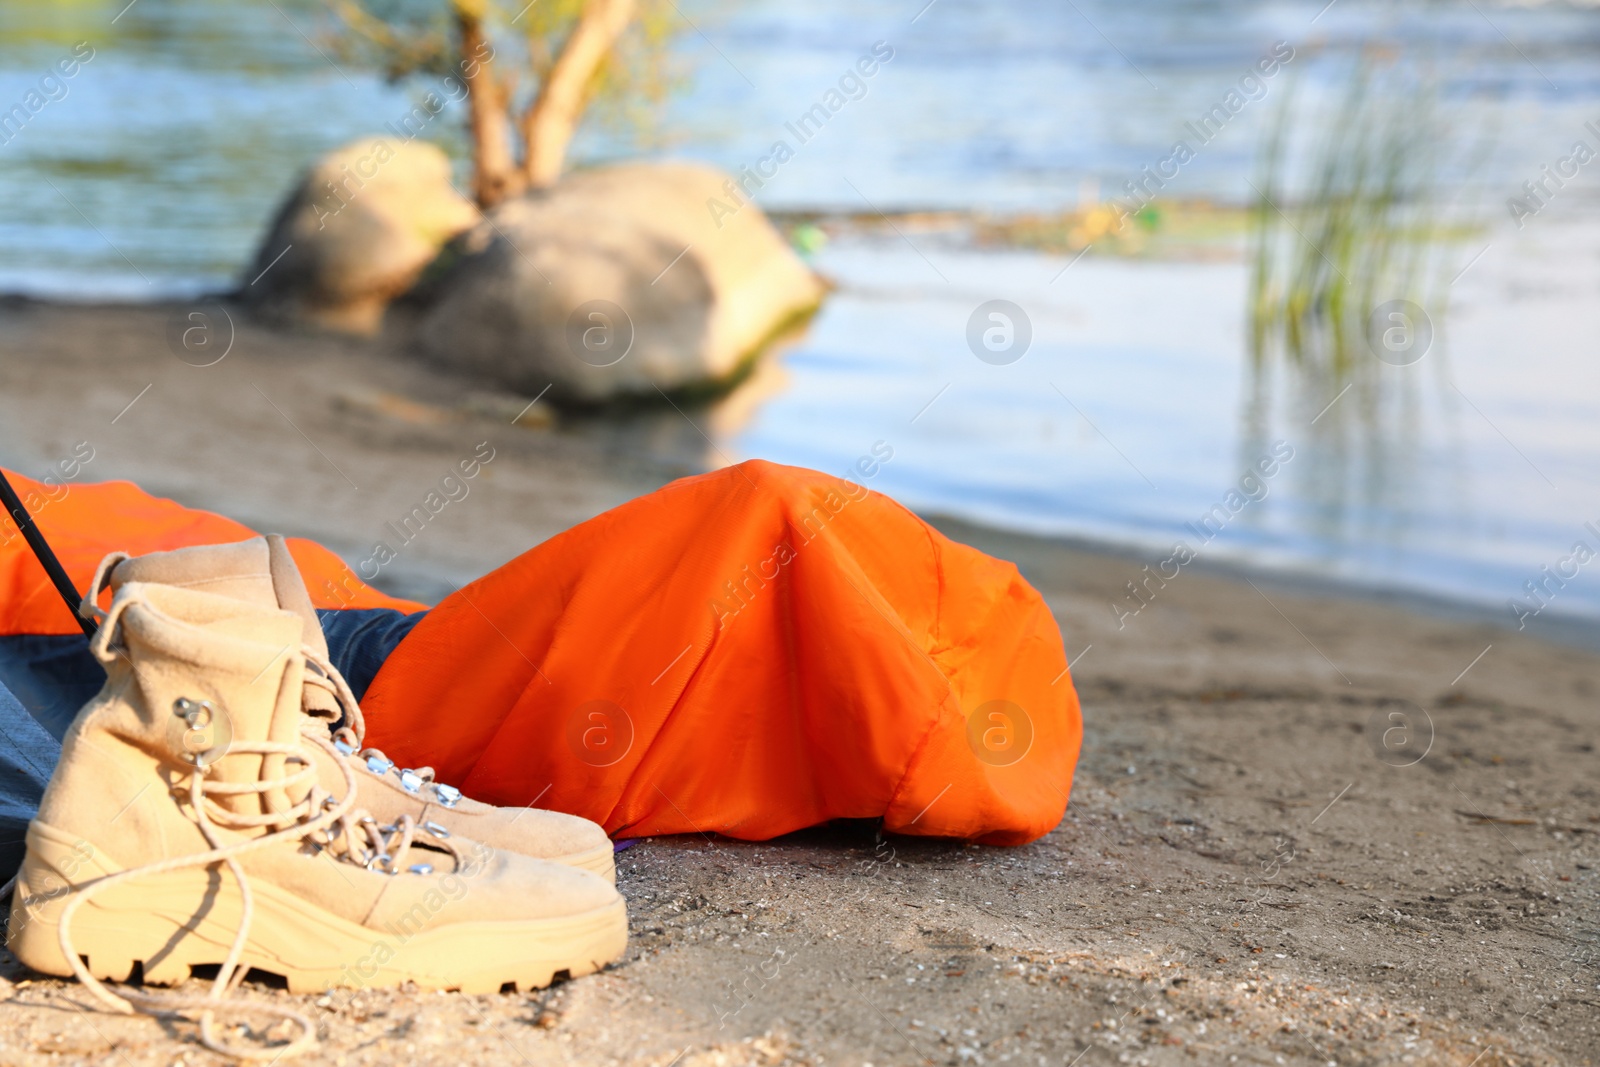 Photo of Sleeping bag and boots on beach near lake